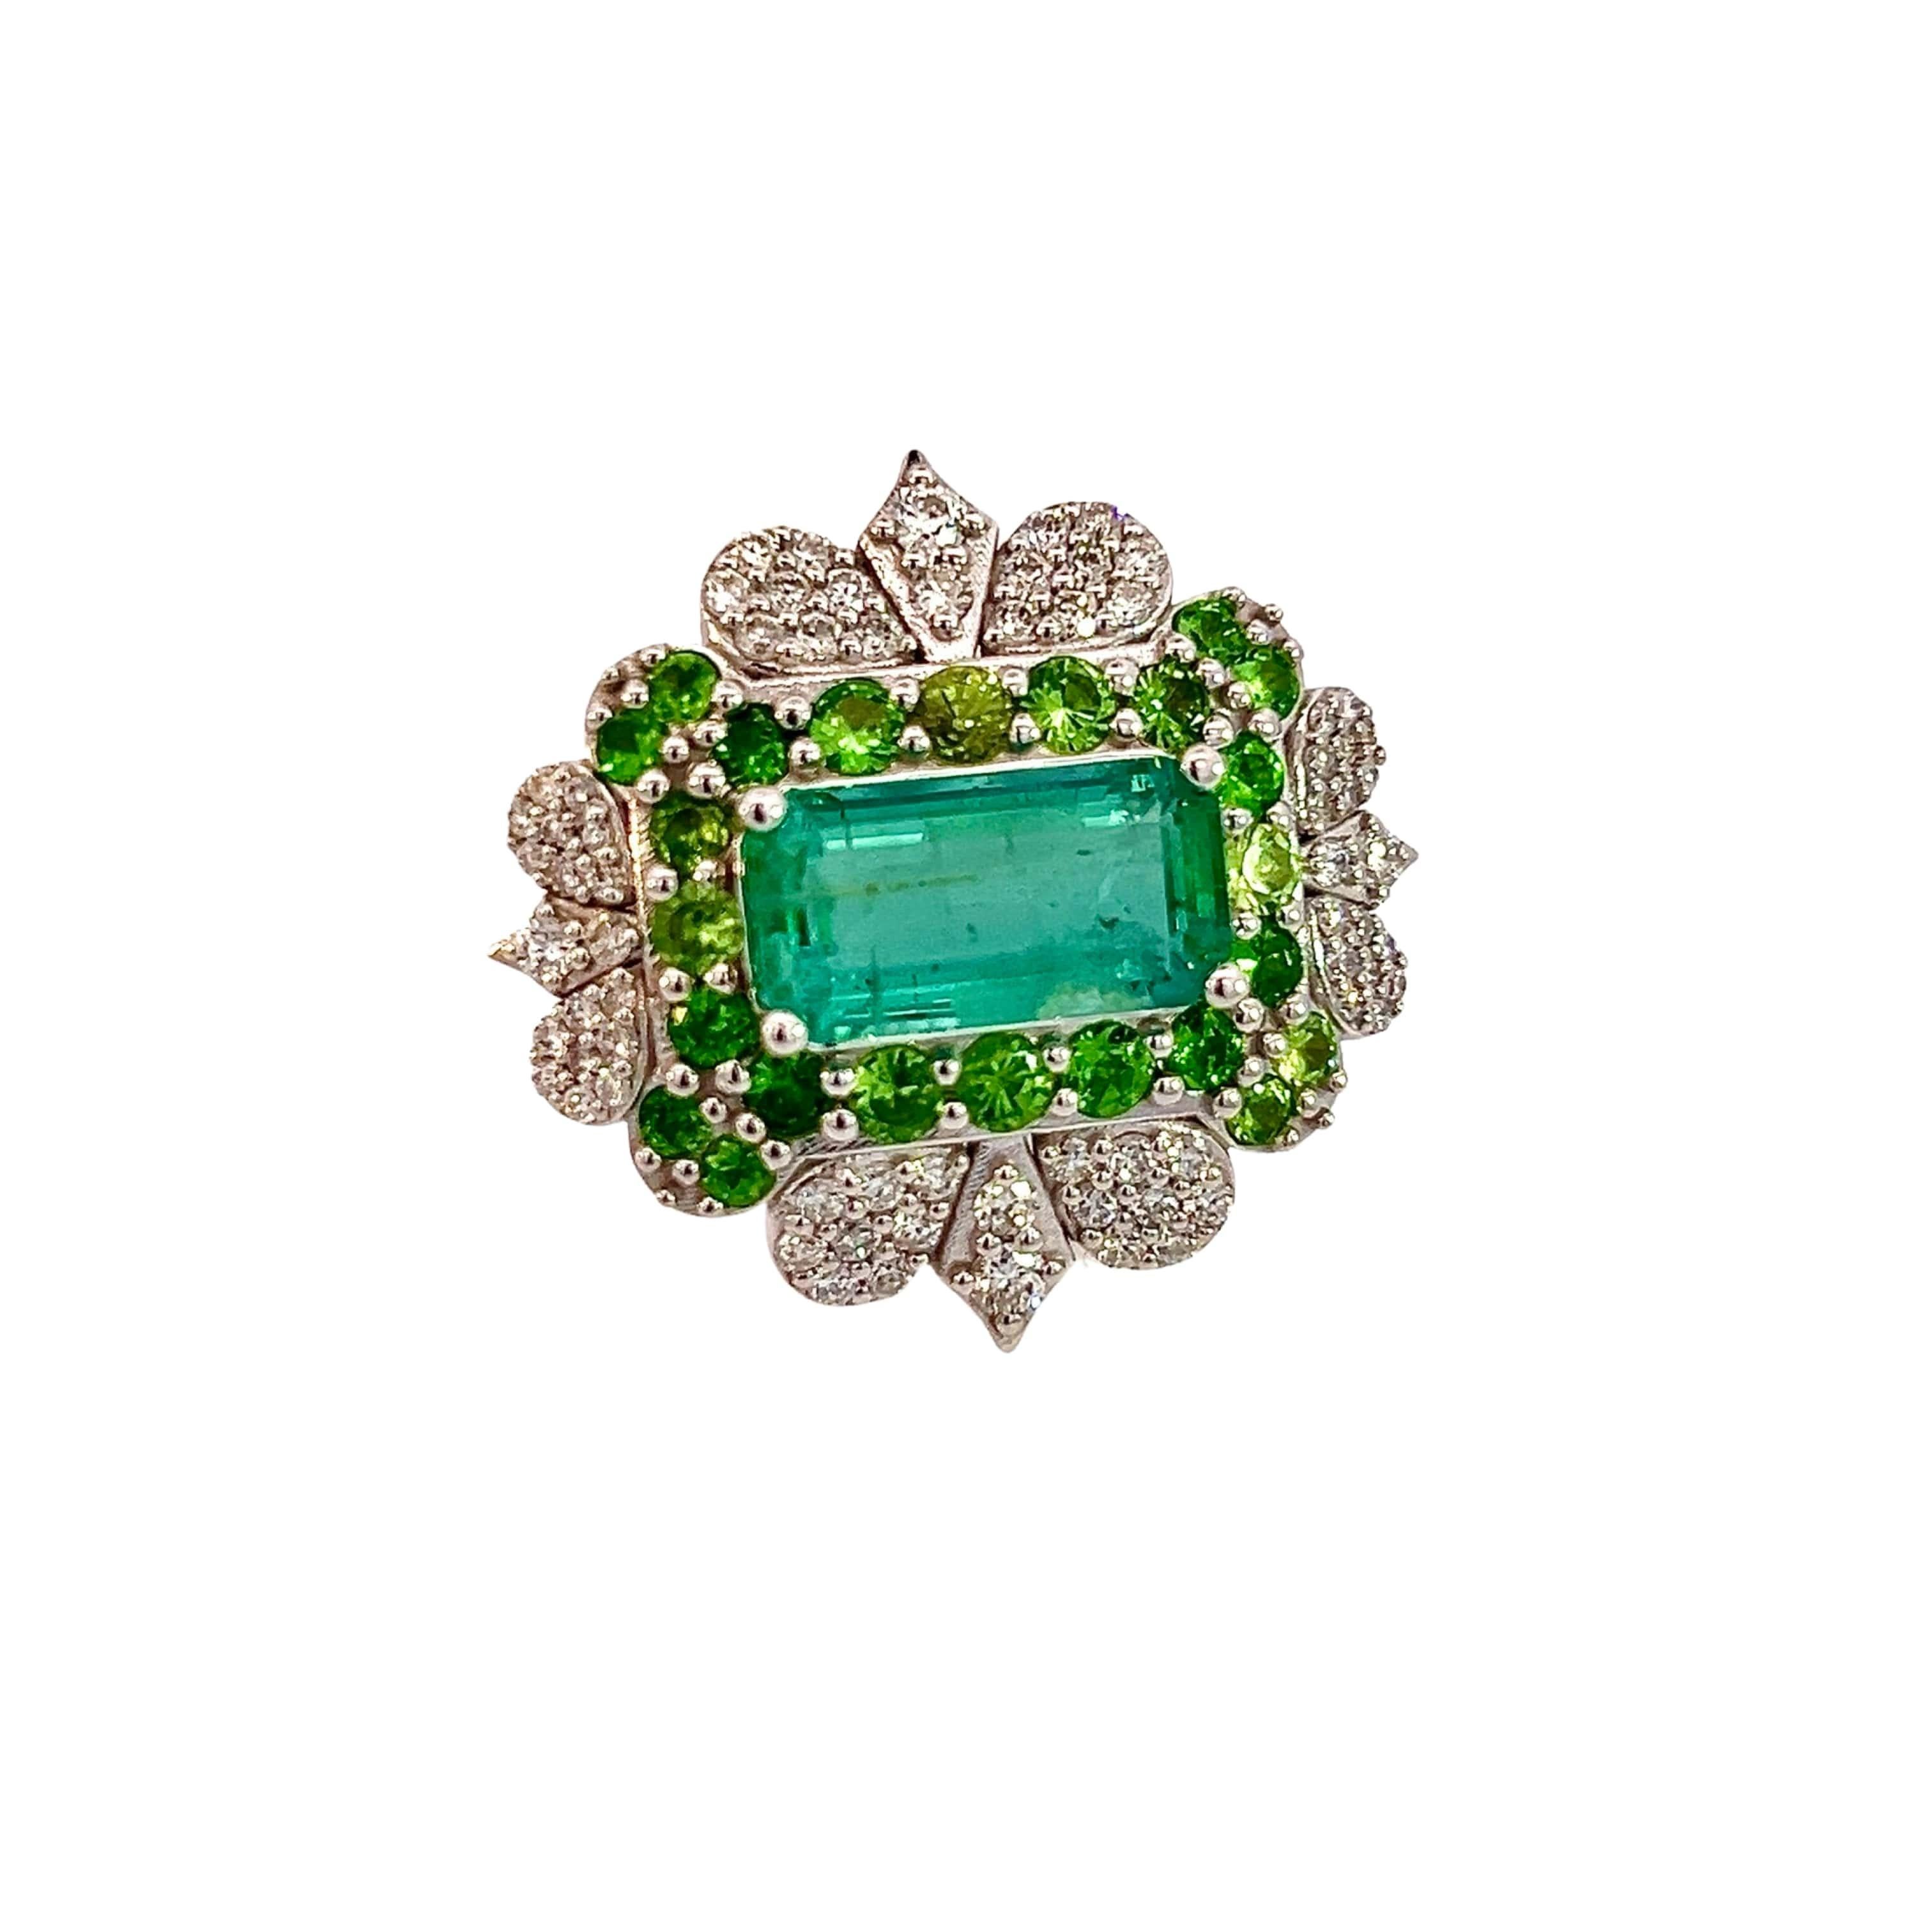 Emerald Cut Natural Emerald Tsavorite Diamond Ring 6.75 14k White Gold 9.22 TCW Certified For Sale